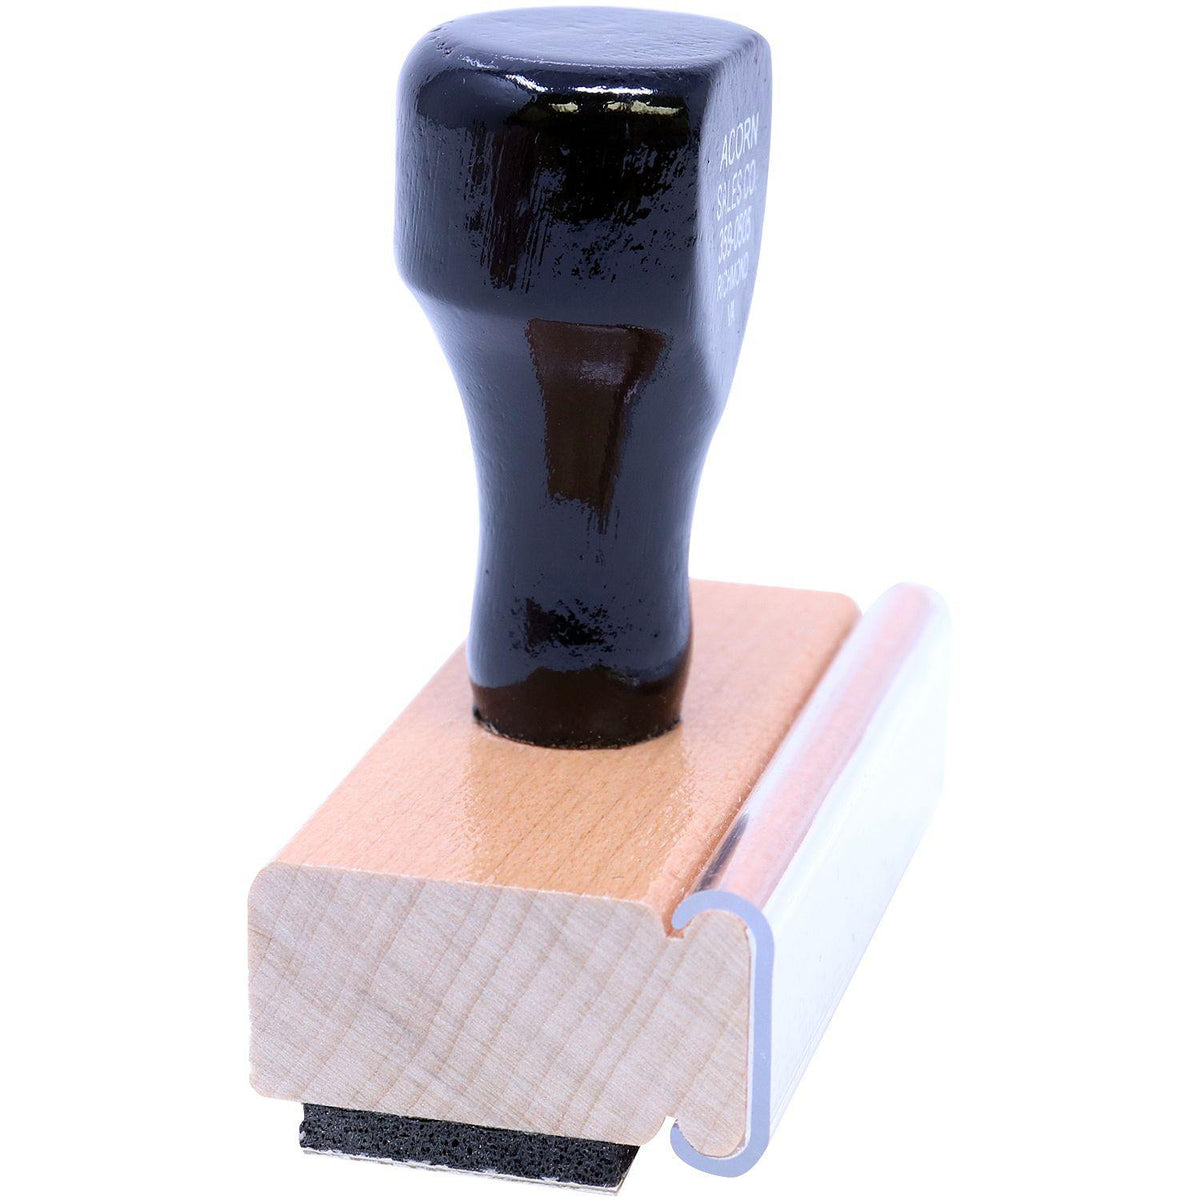 Large Super Homework Rubber Stamp - Engineer Seal Stamps - Brand_Acorn, Impression Size_Large, Stamp Type_Regular Stamp, Type of Use_Teacher